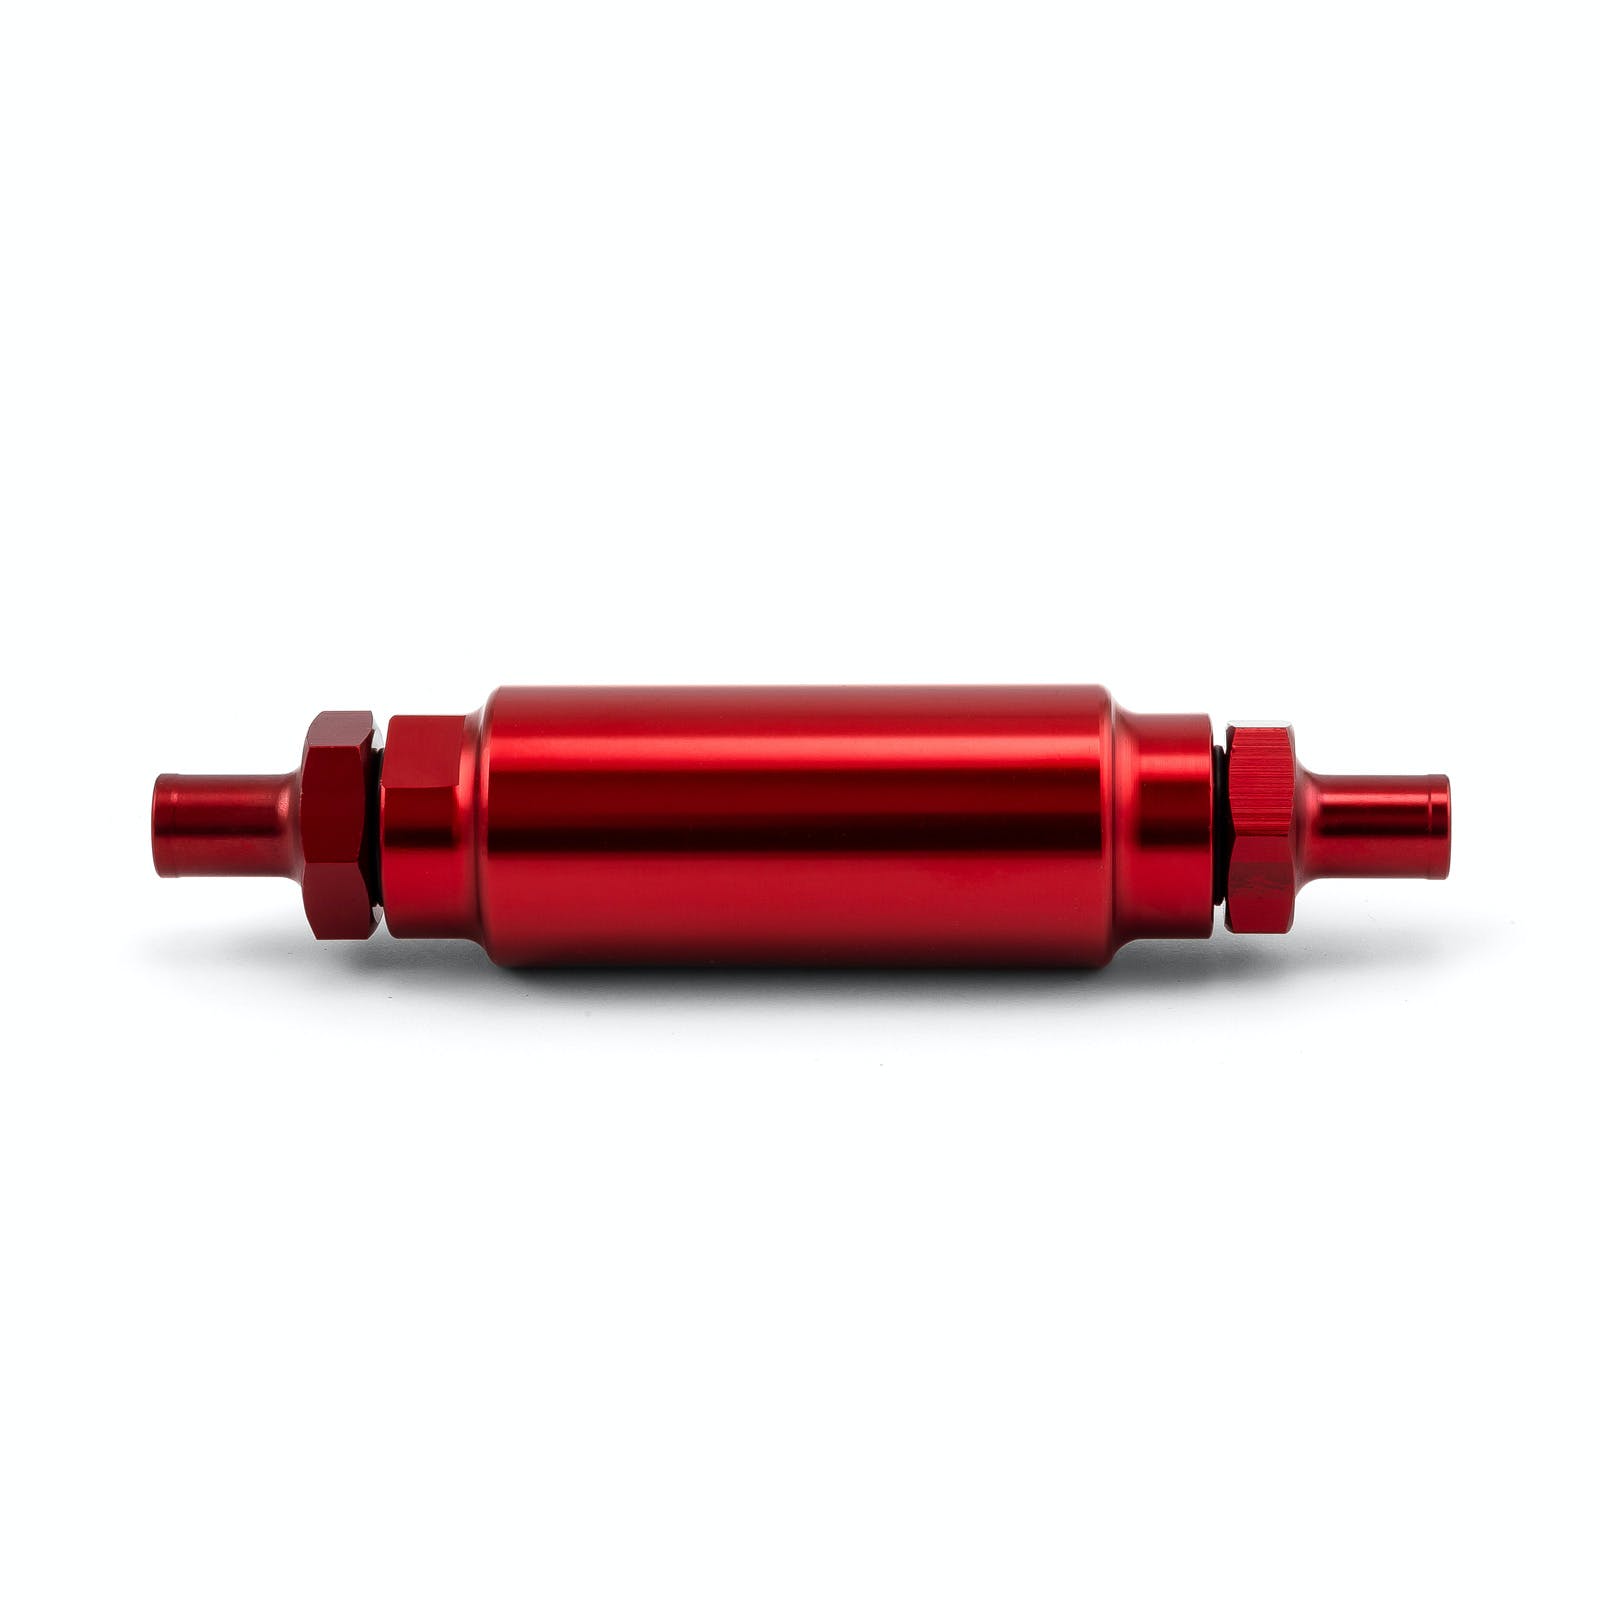 Speedmaster PCE132.1007 Inline Billet Aluminum Fuel Filter 3/8 NPT - 3/8 NPT Male Red